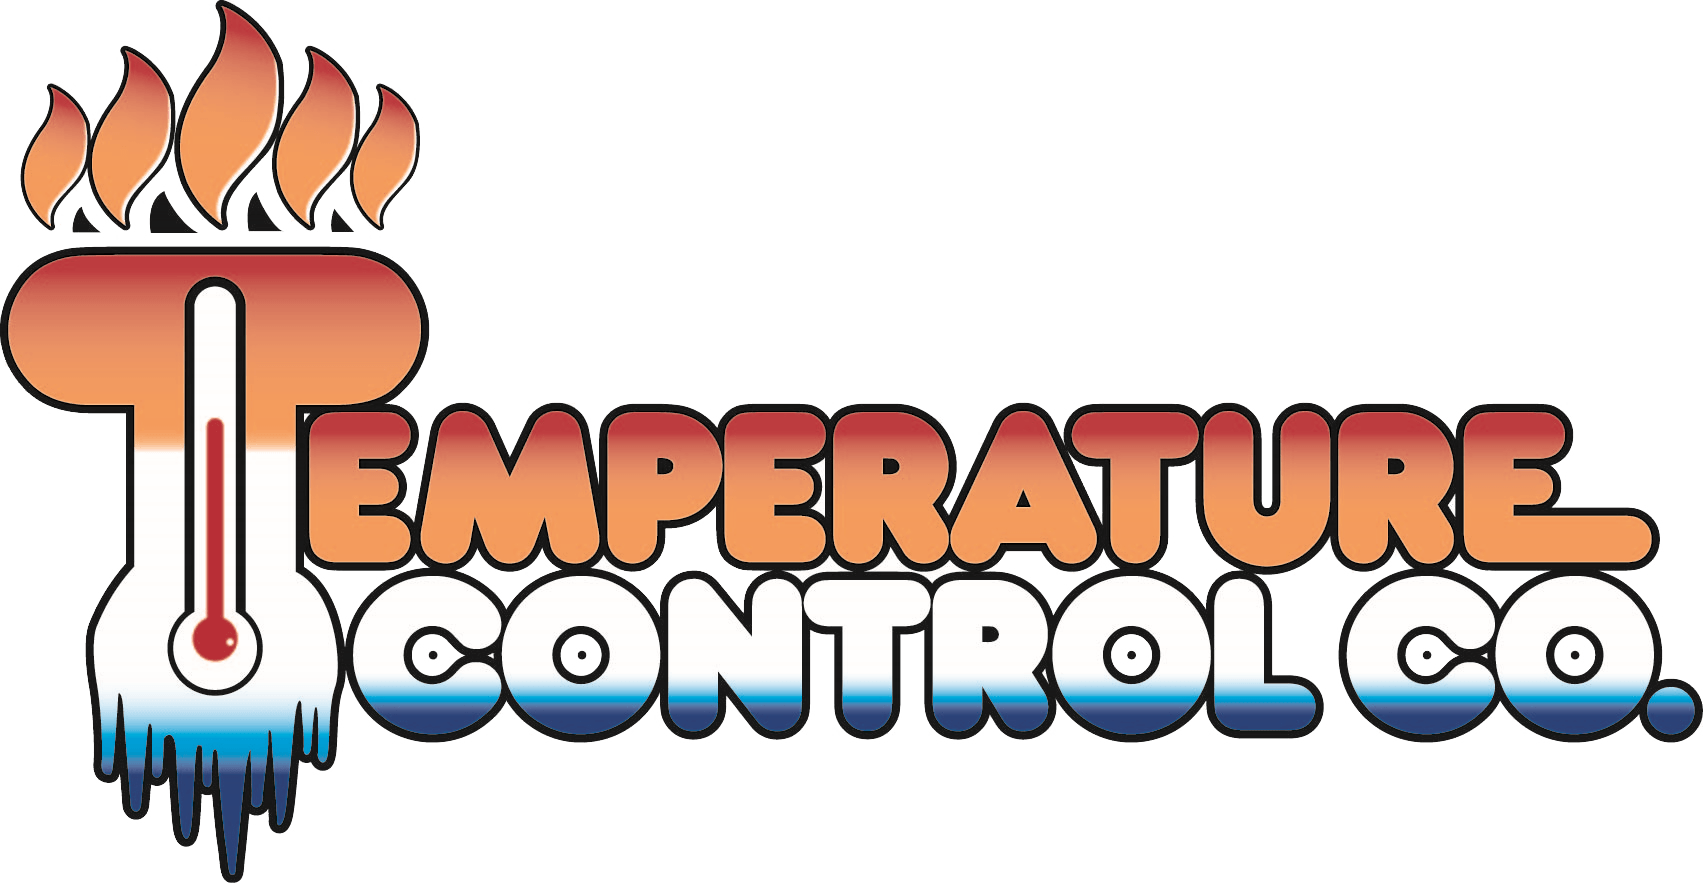 Temperature Control Co.